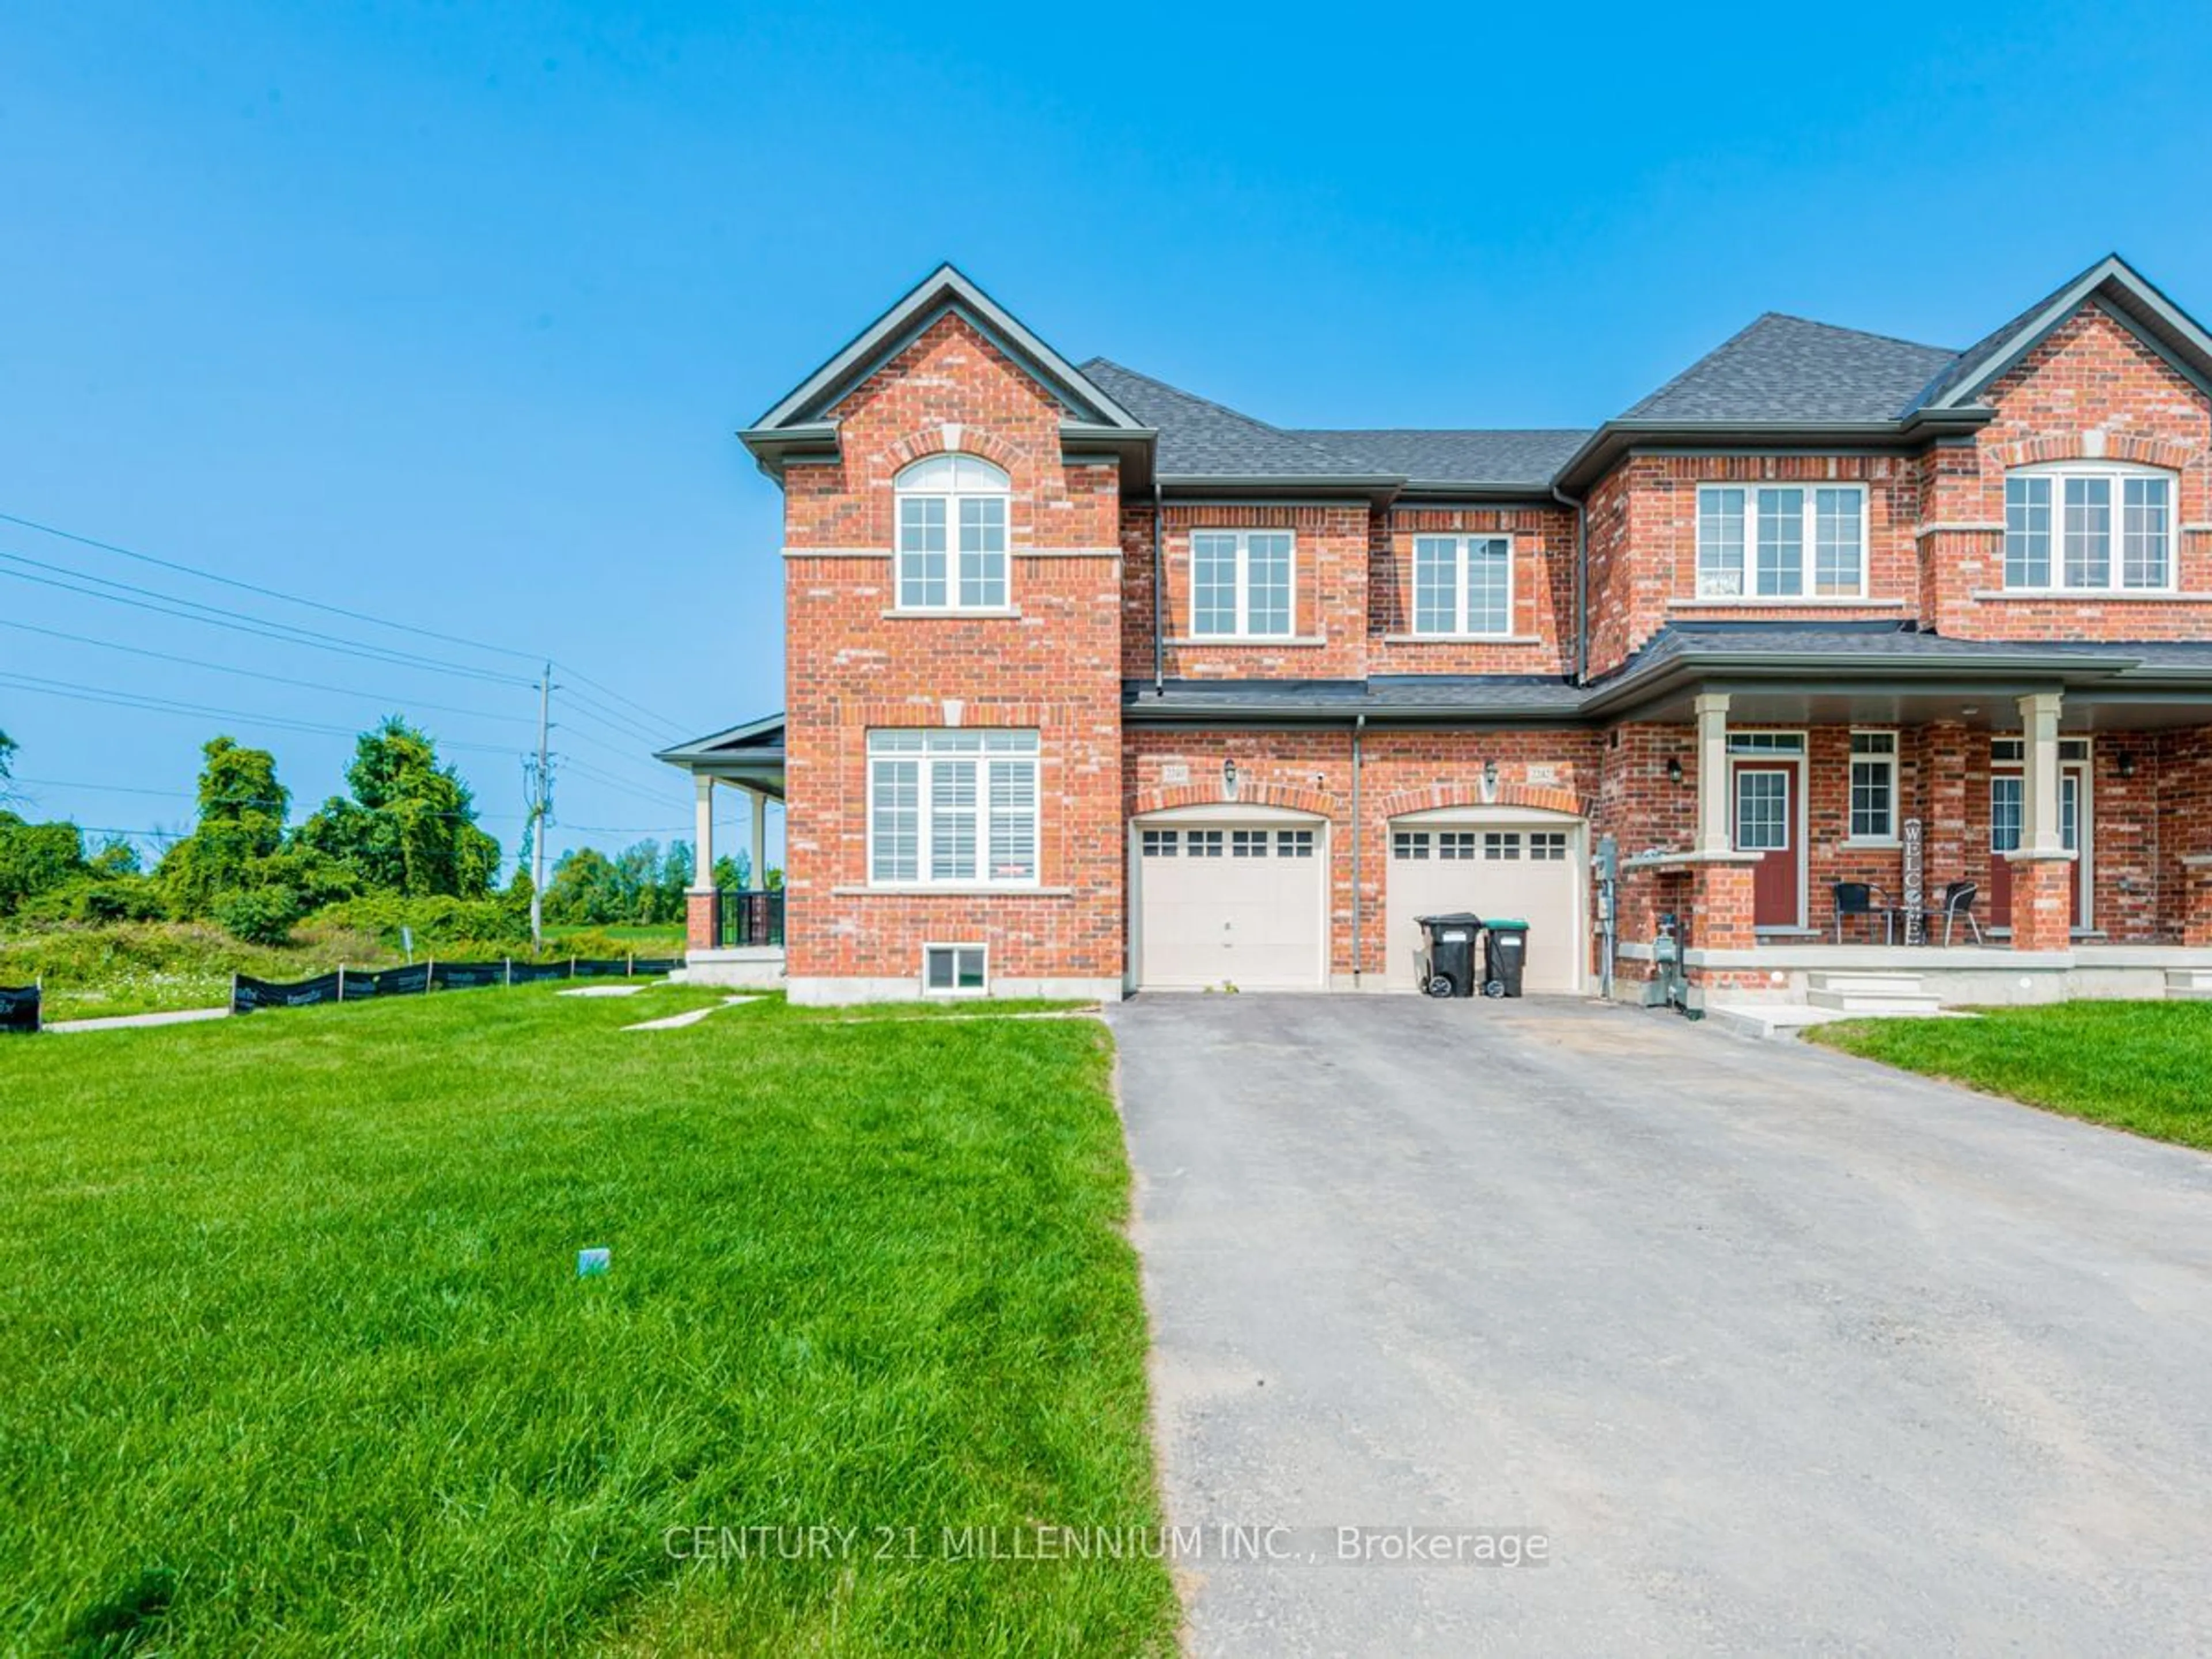 Home with brick exterior material for 2240 Grainger Loop, Innisfil Ontario L9S 0N1